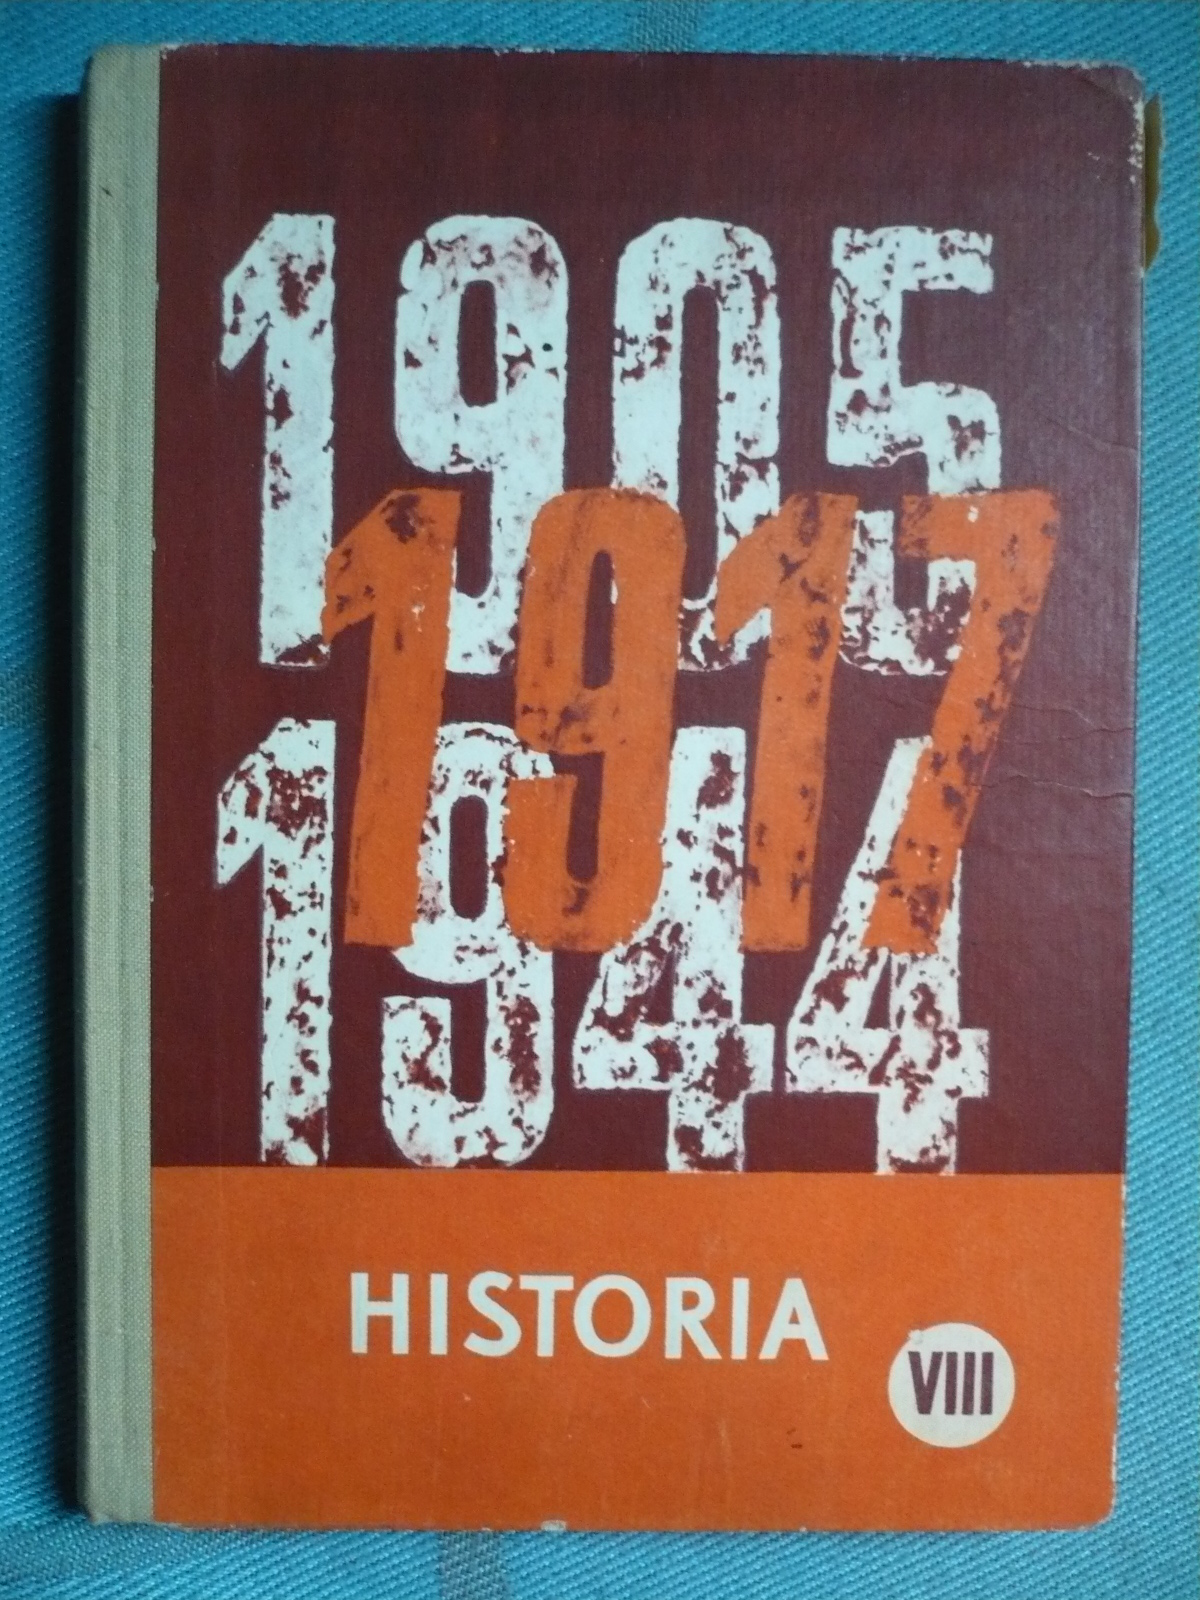 Historia Kl. VIII (1968).JPG